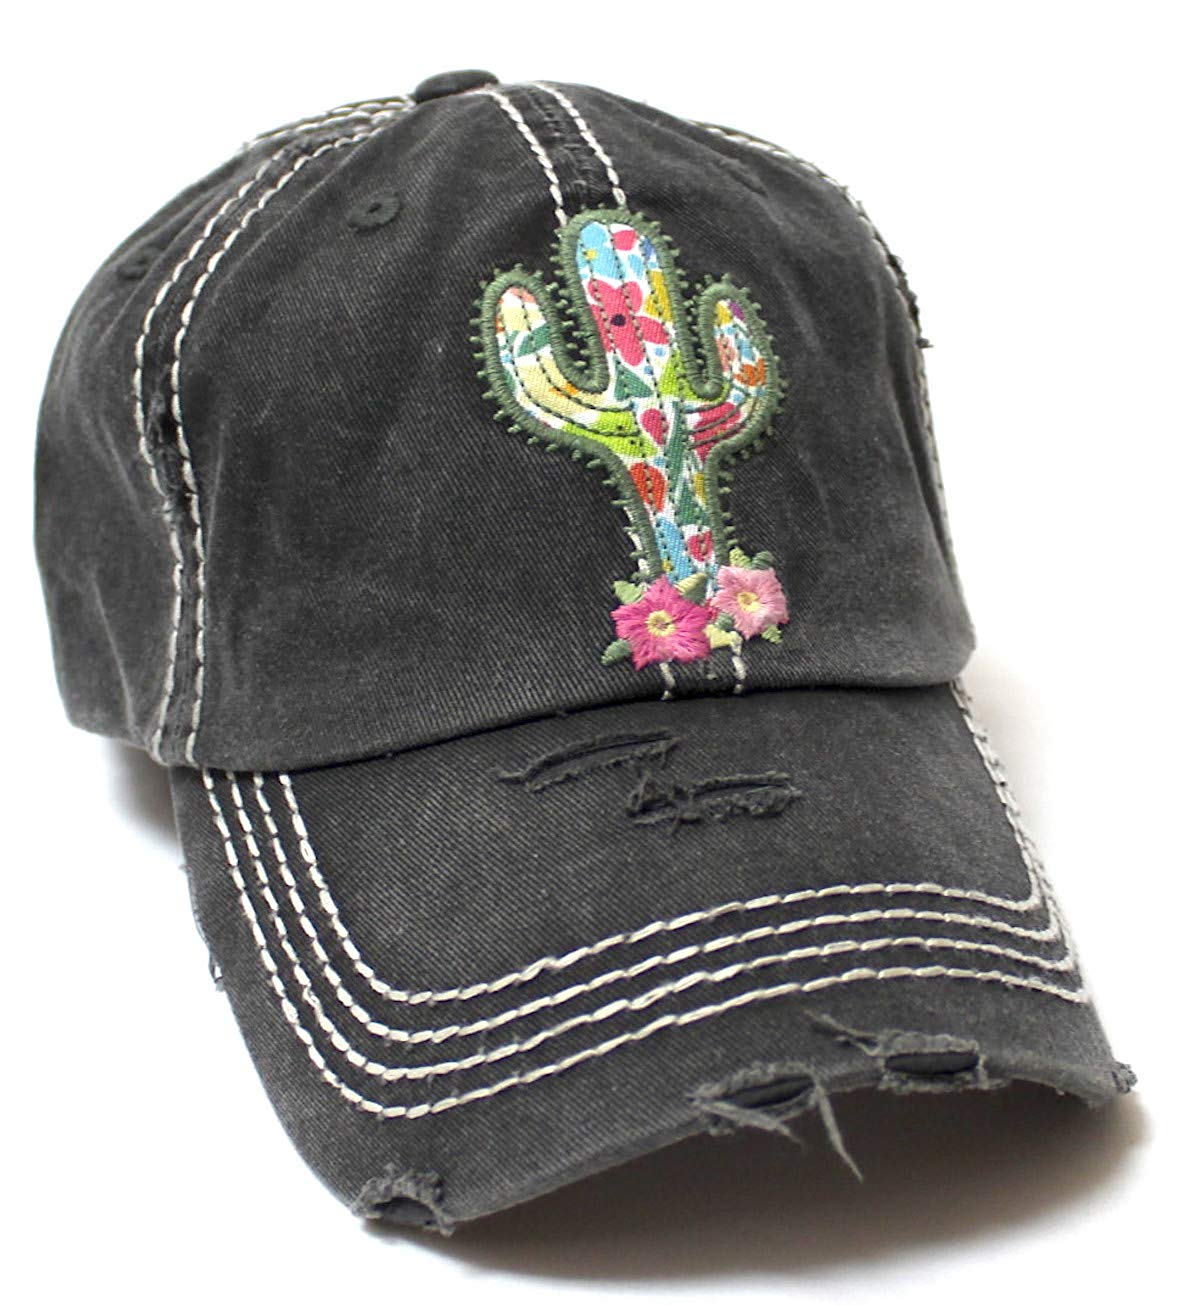 Cactus Floral Patchwork Embroidery Baseball Cap w/Monogram Bloom Detail, Charcoal - Caps 'N Vintage 